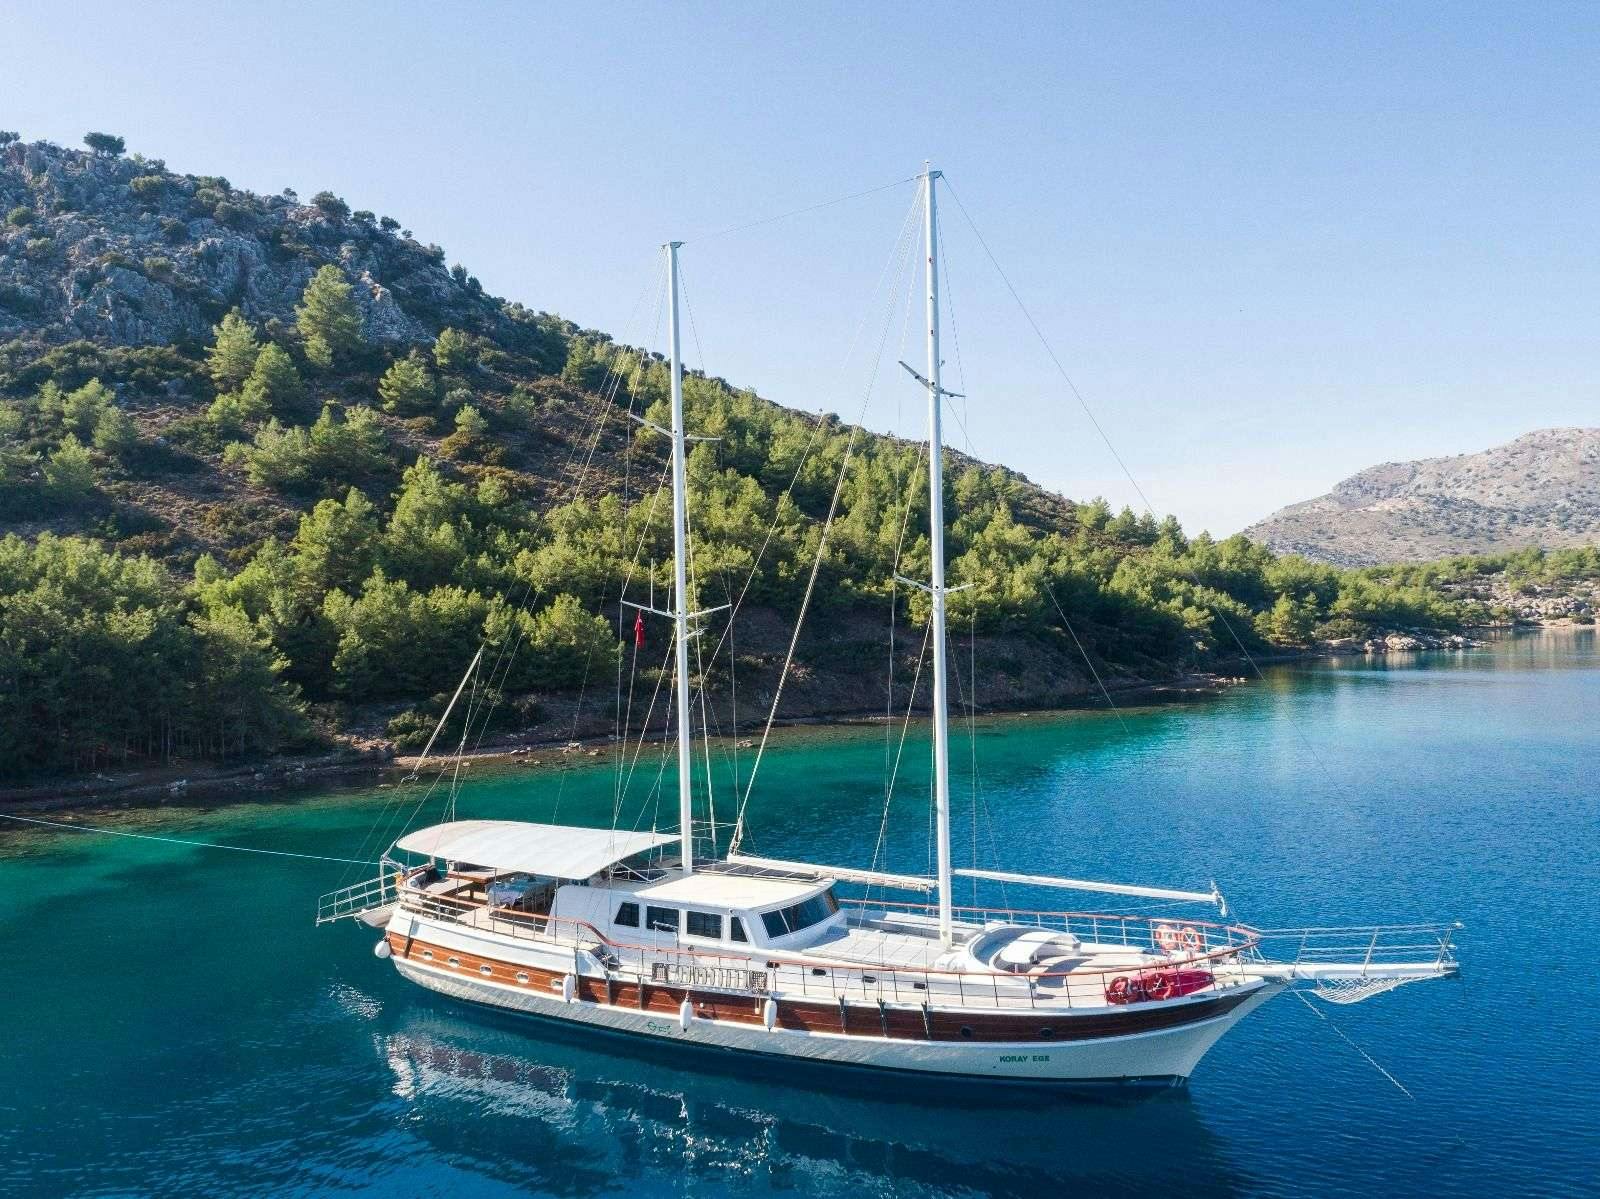 koray ege - Yacht Charter Puntone di Scarlino & Boat hire in Greece & Turkey 1